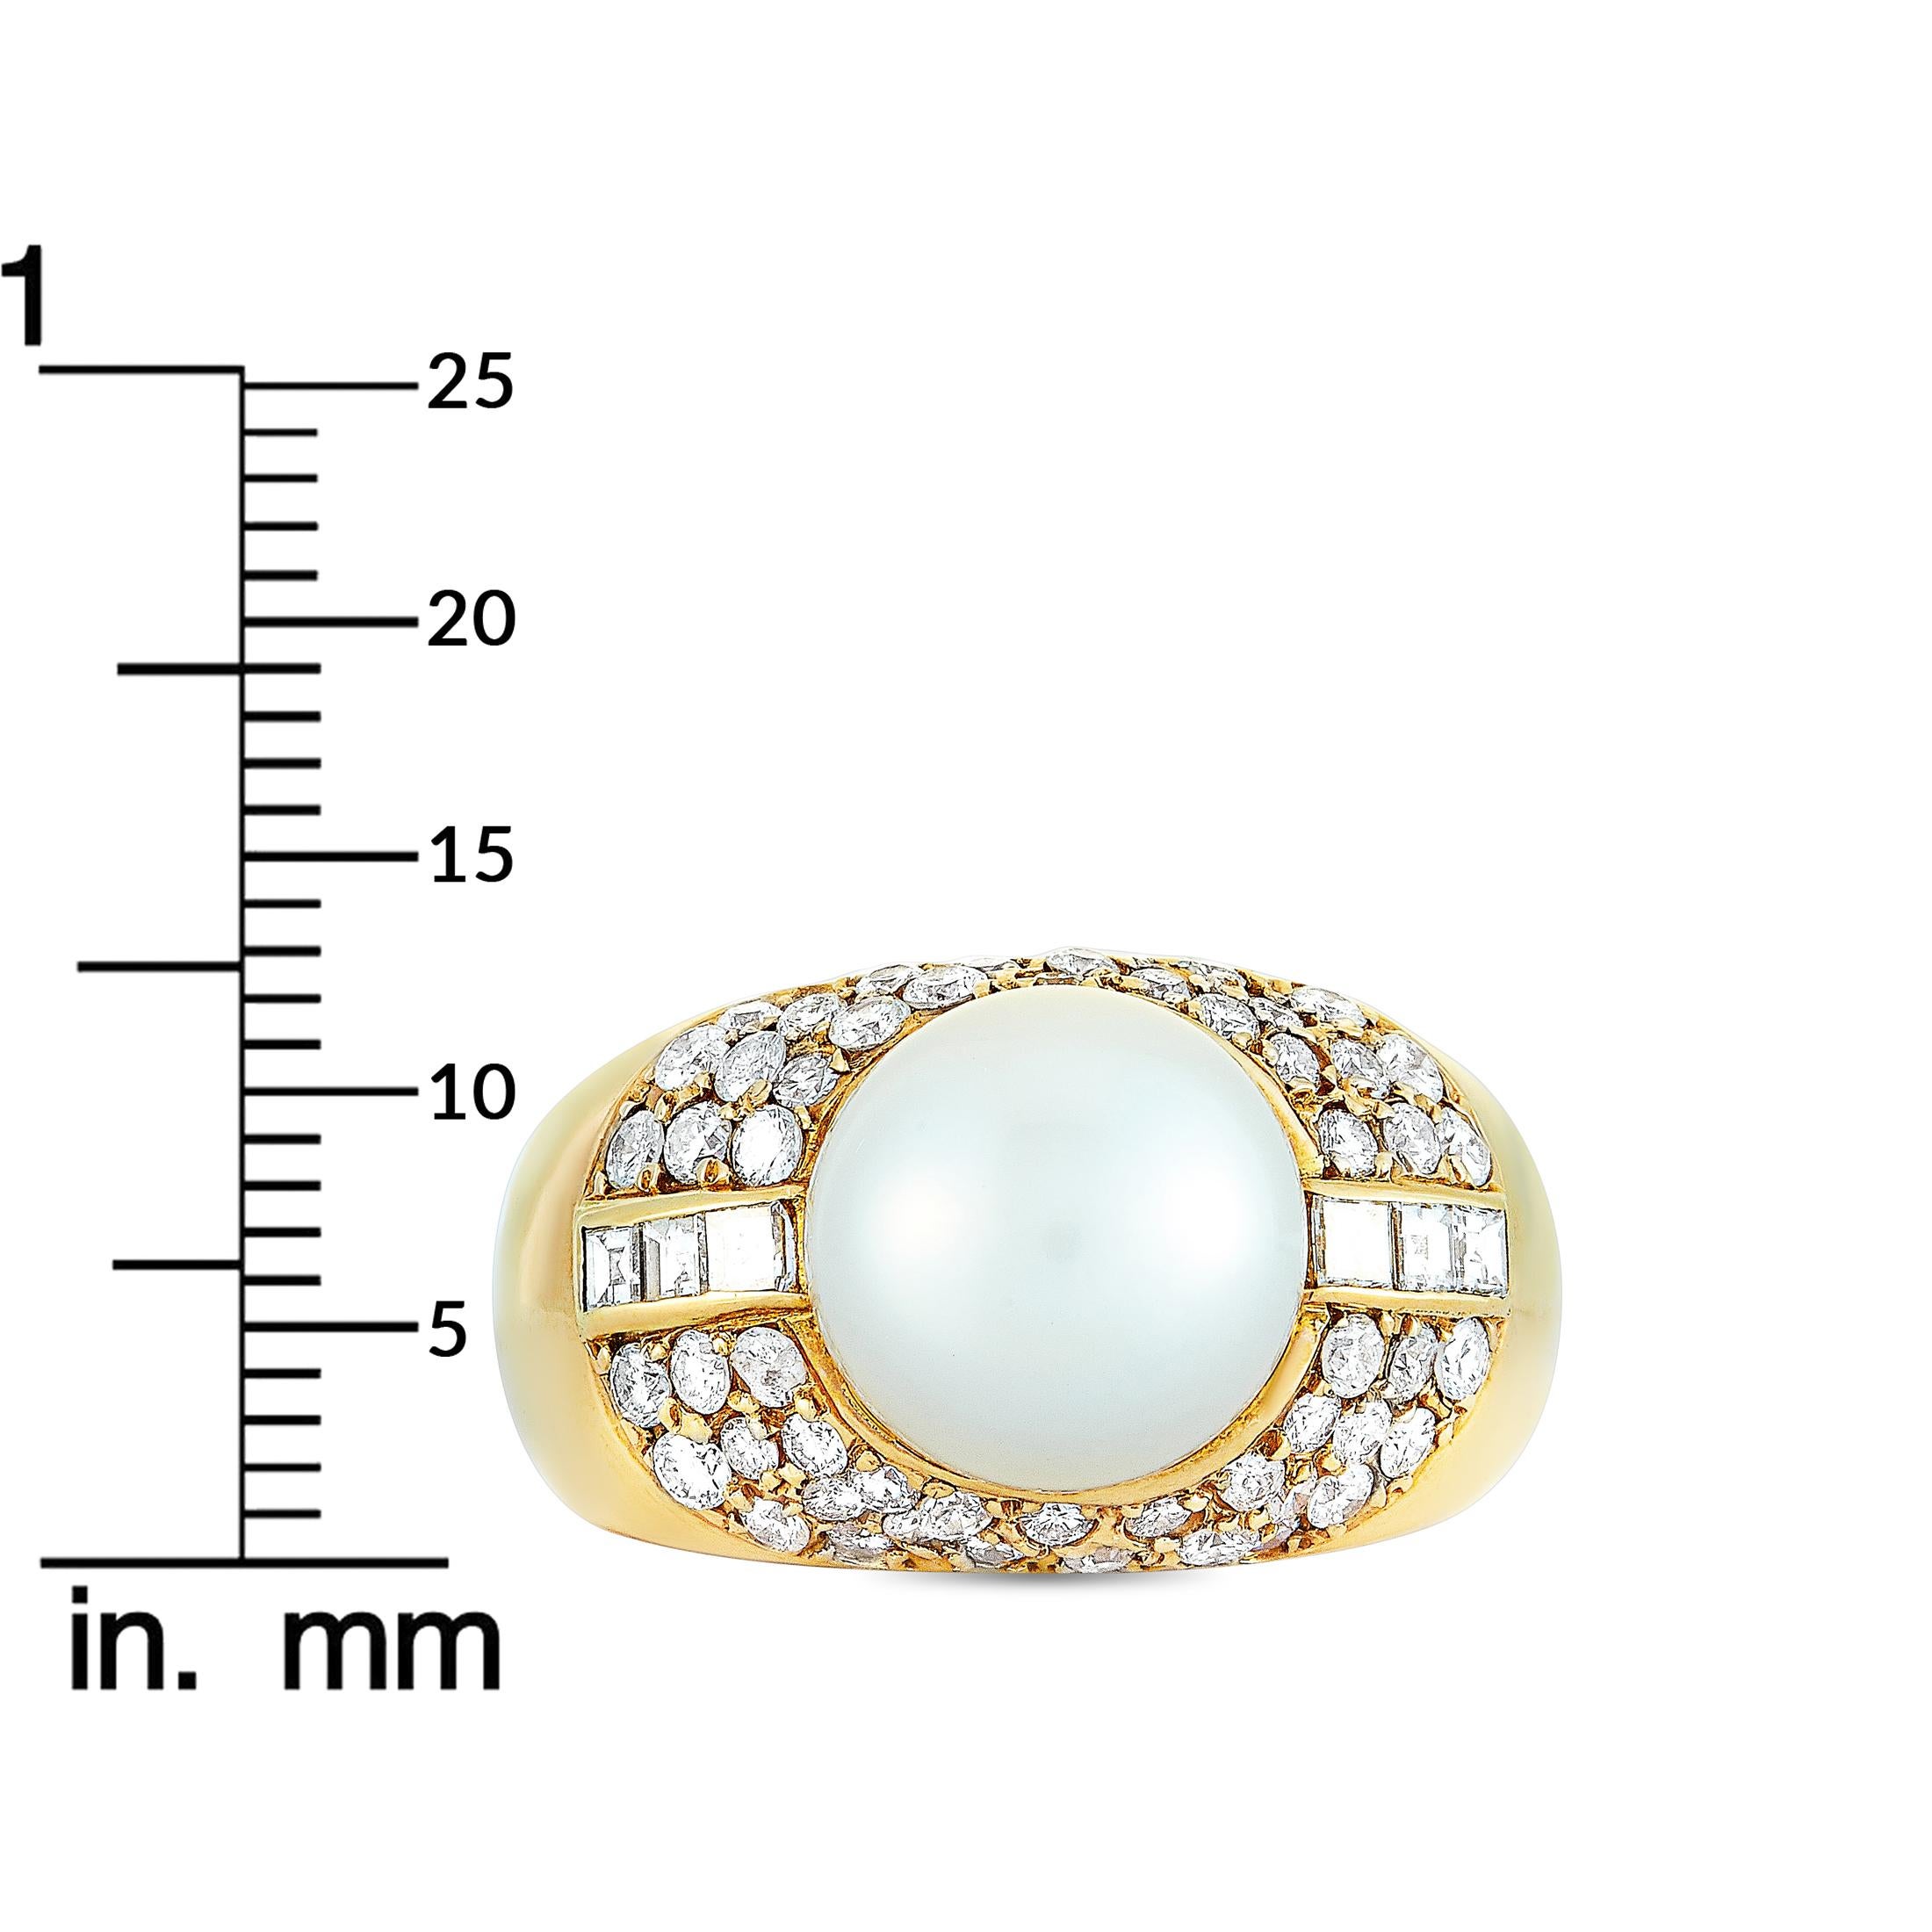 LB Exclusive 18 Karat Yellow Gold 1.51 Carat Diamond and Pearl Ring 2